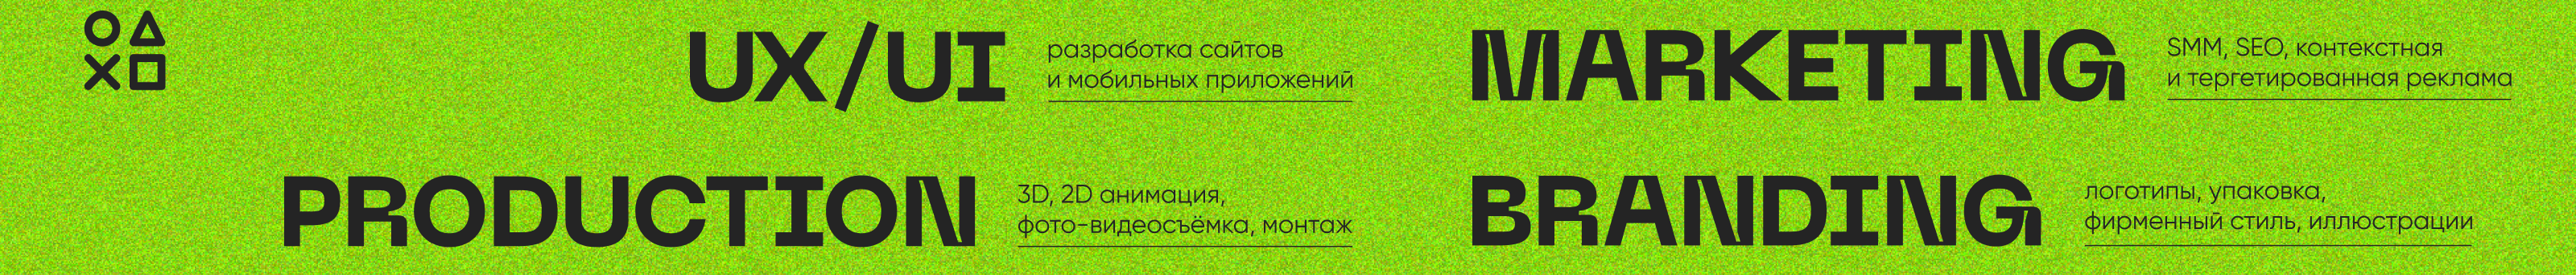 Sergey Vorobyev's profile banner